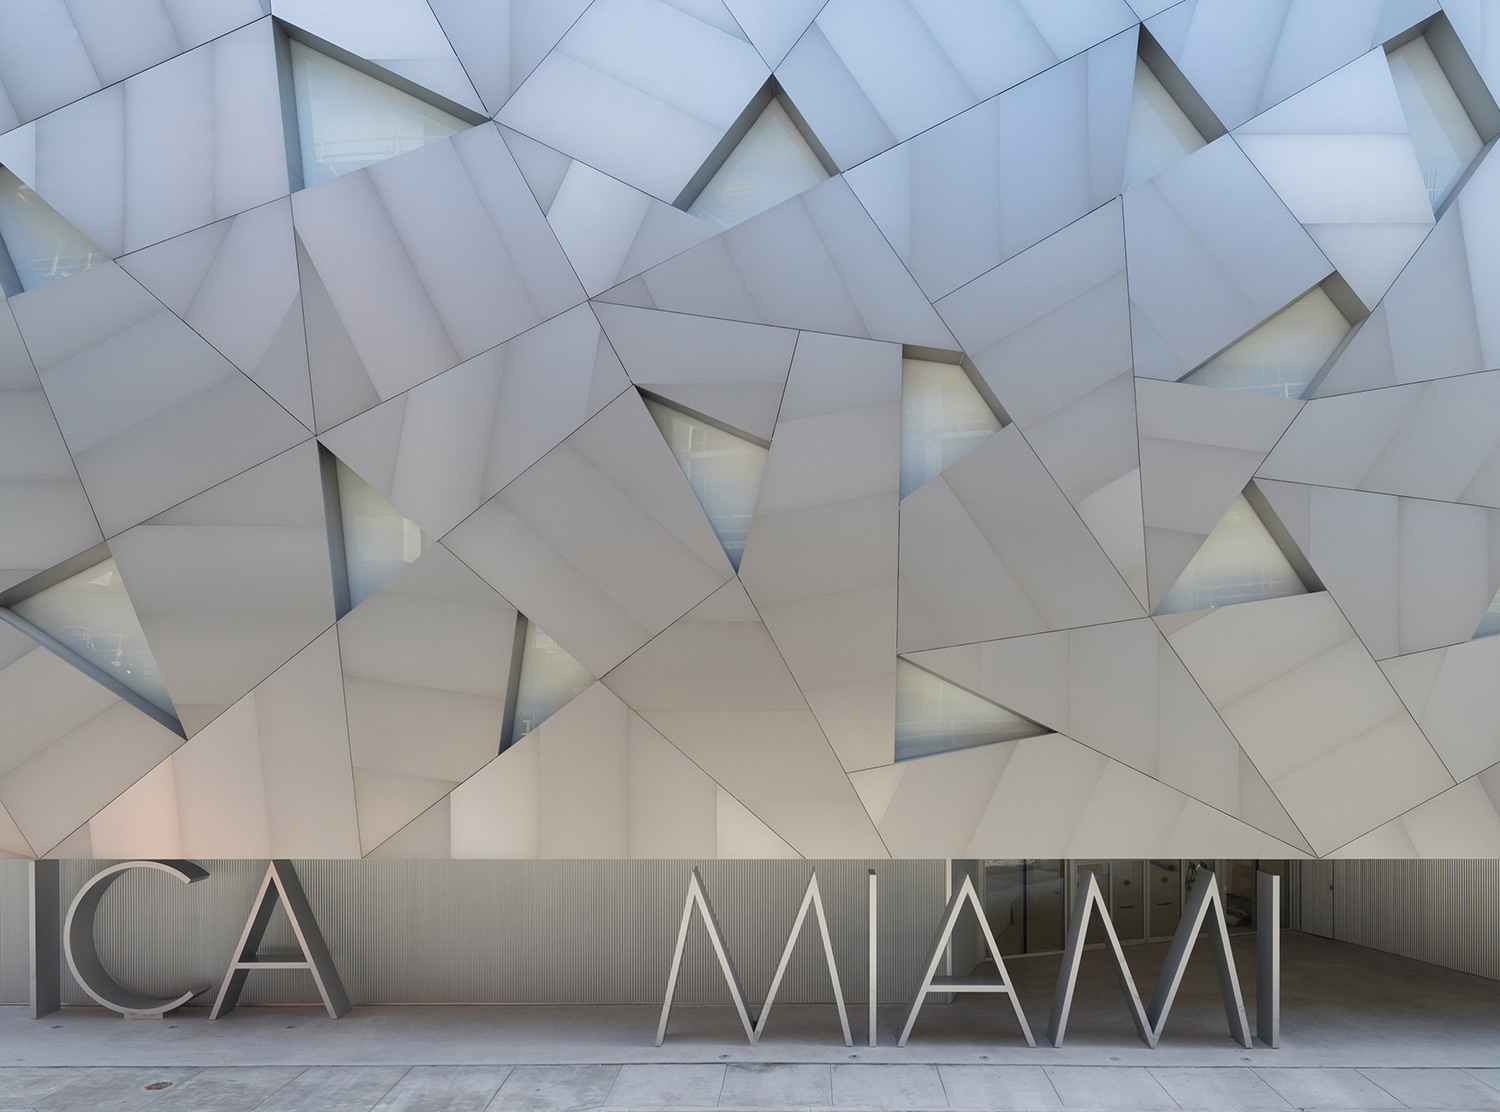 Façade of the Institute of Contemporary Art Miami